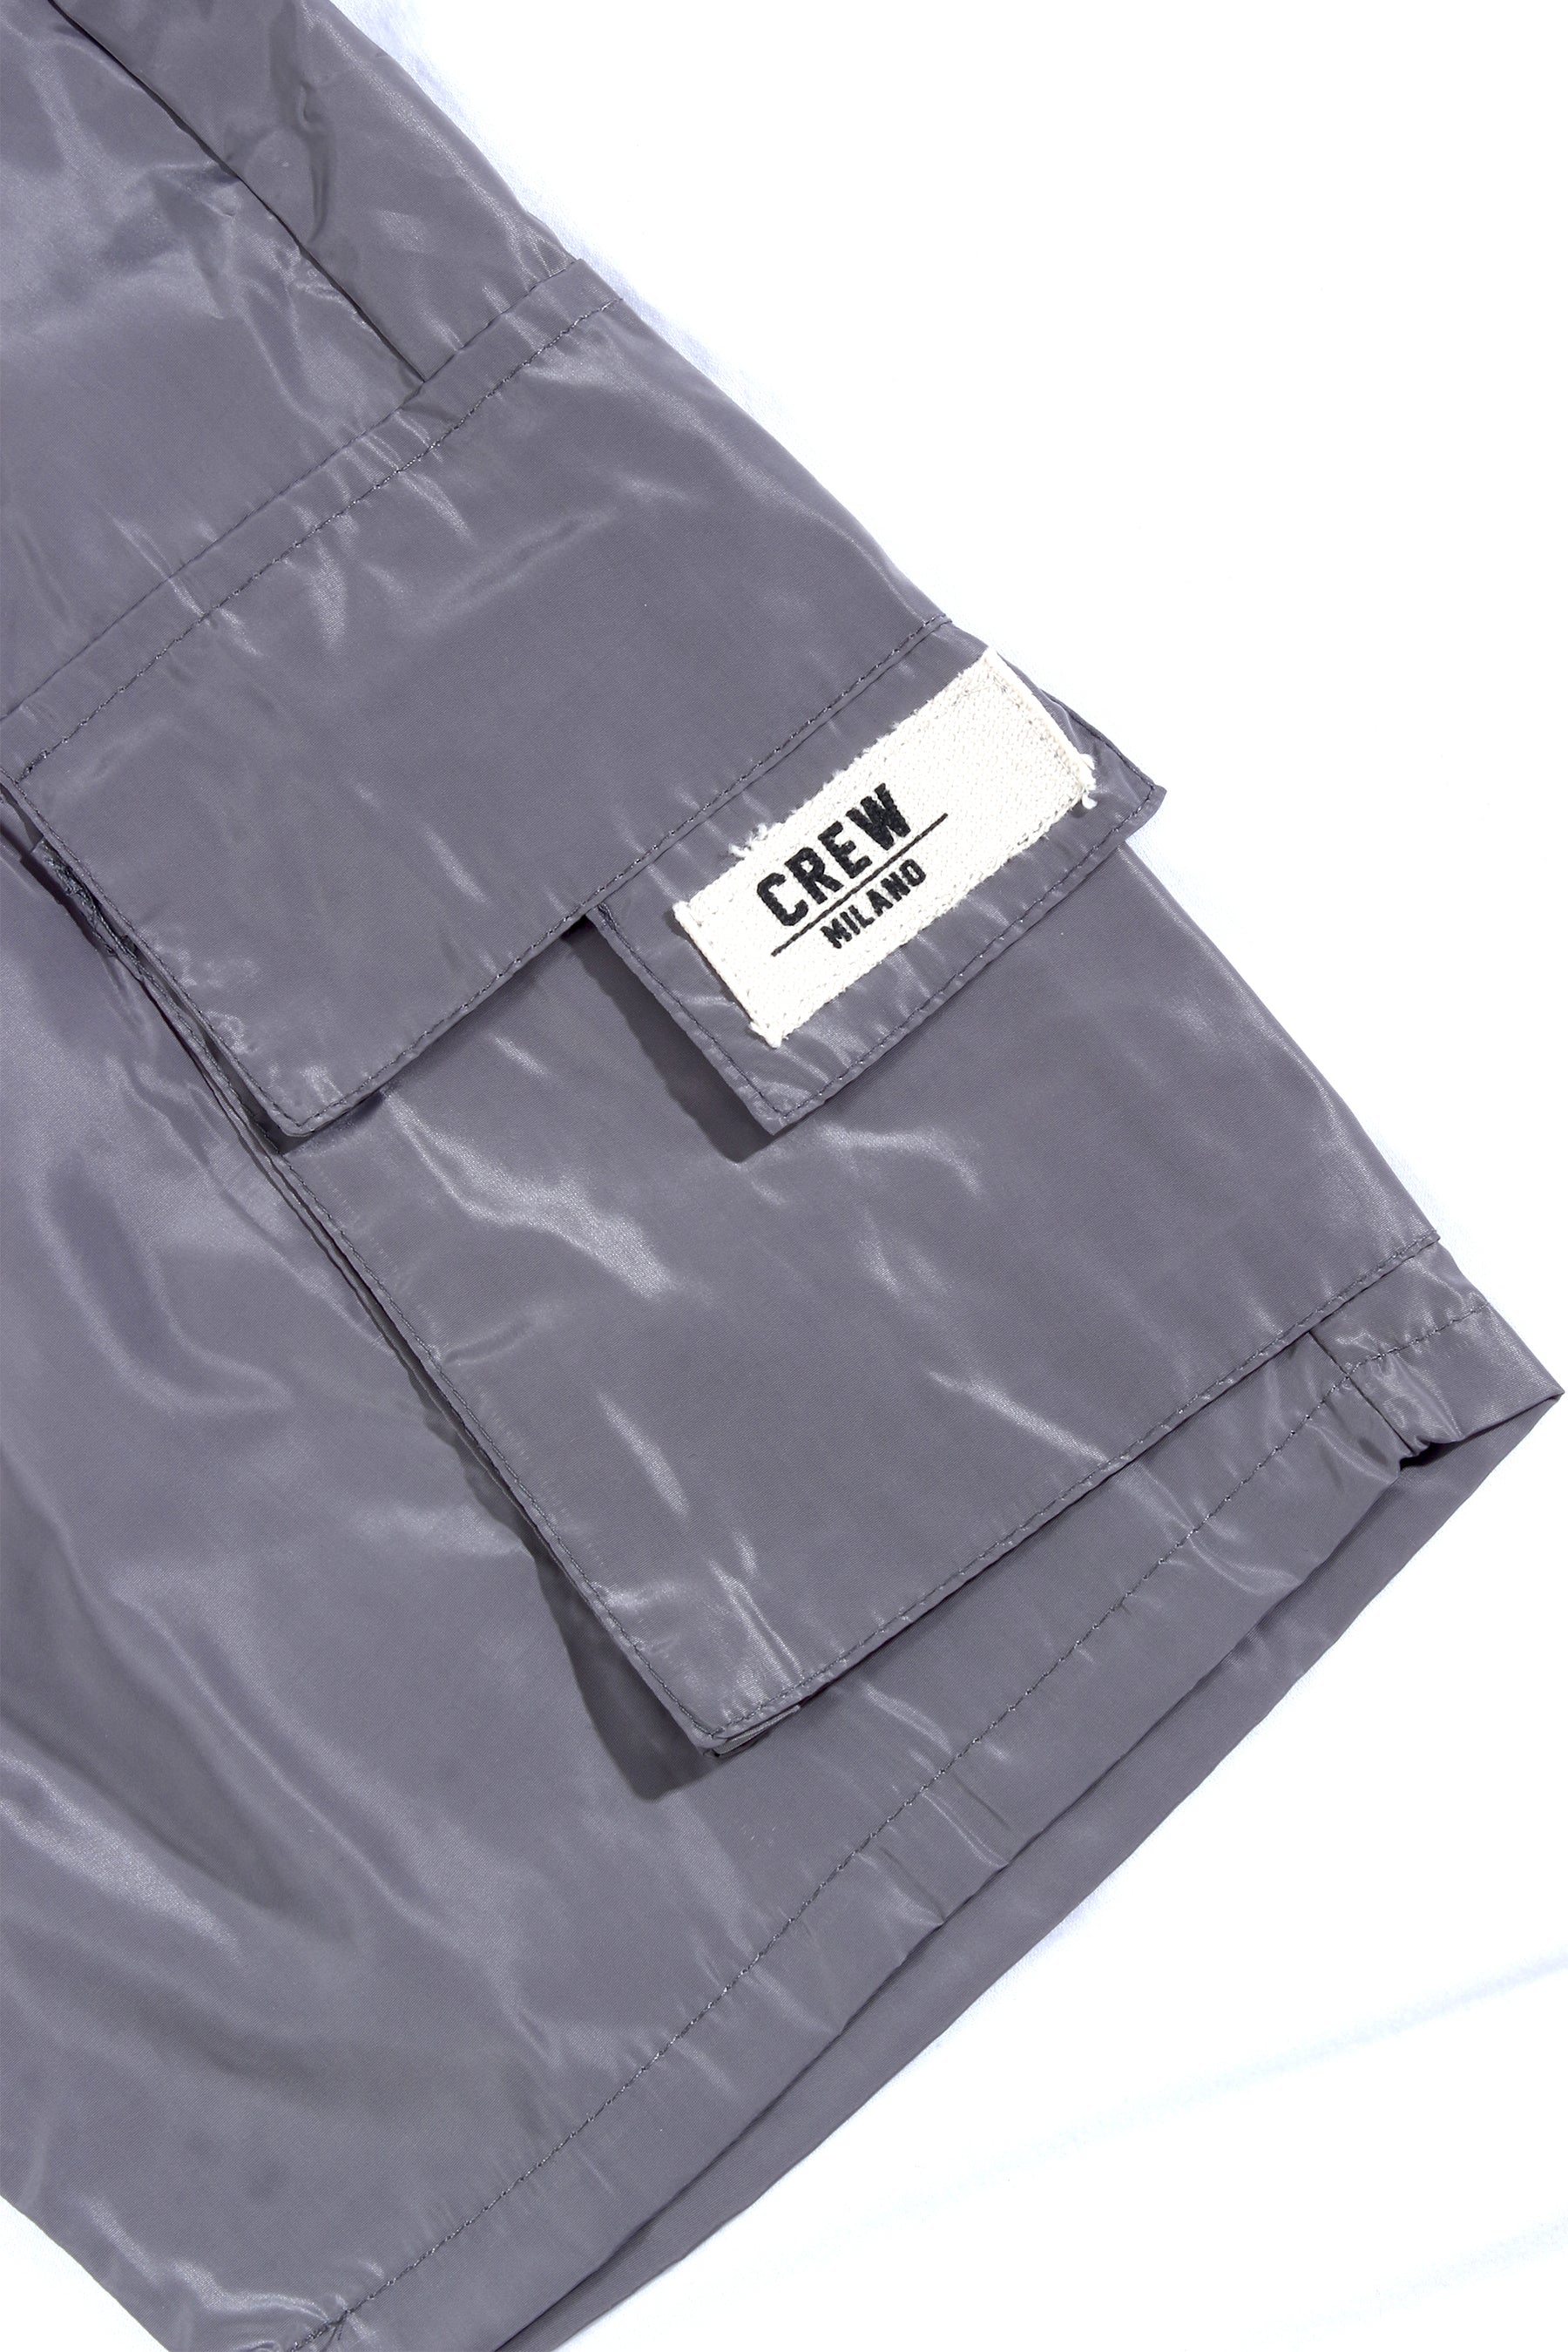 CREW Short Shine Cargo 2 Pockets Pants Grey